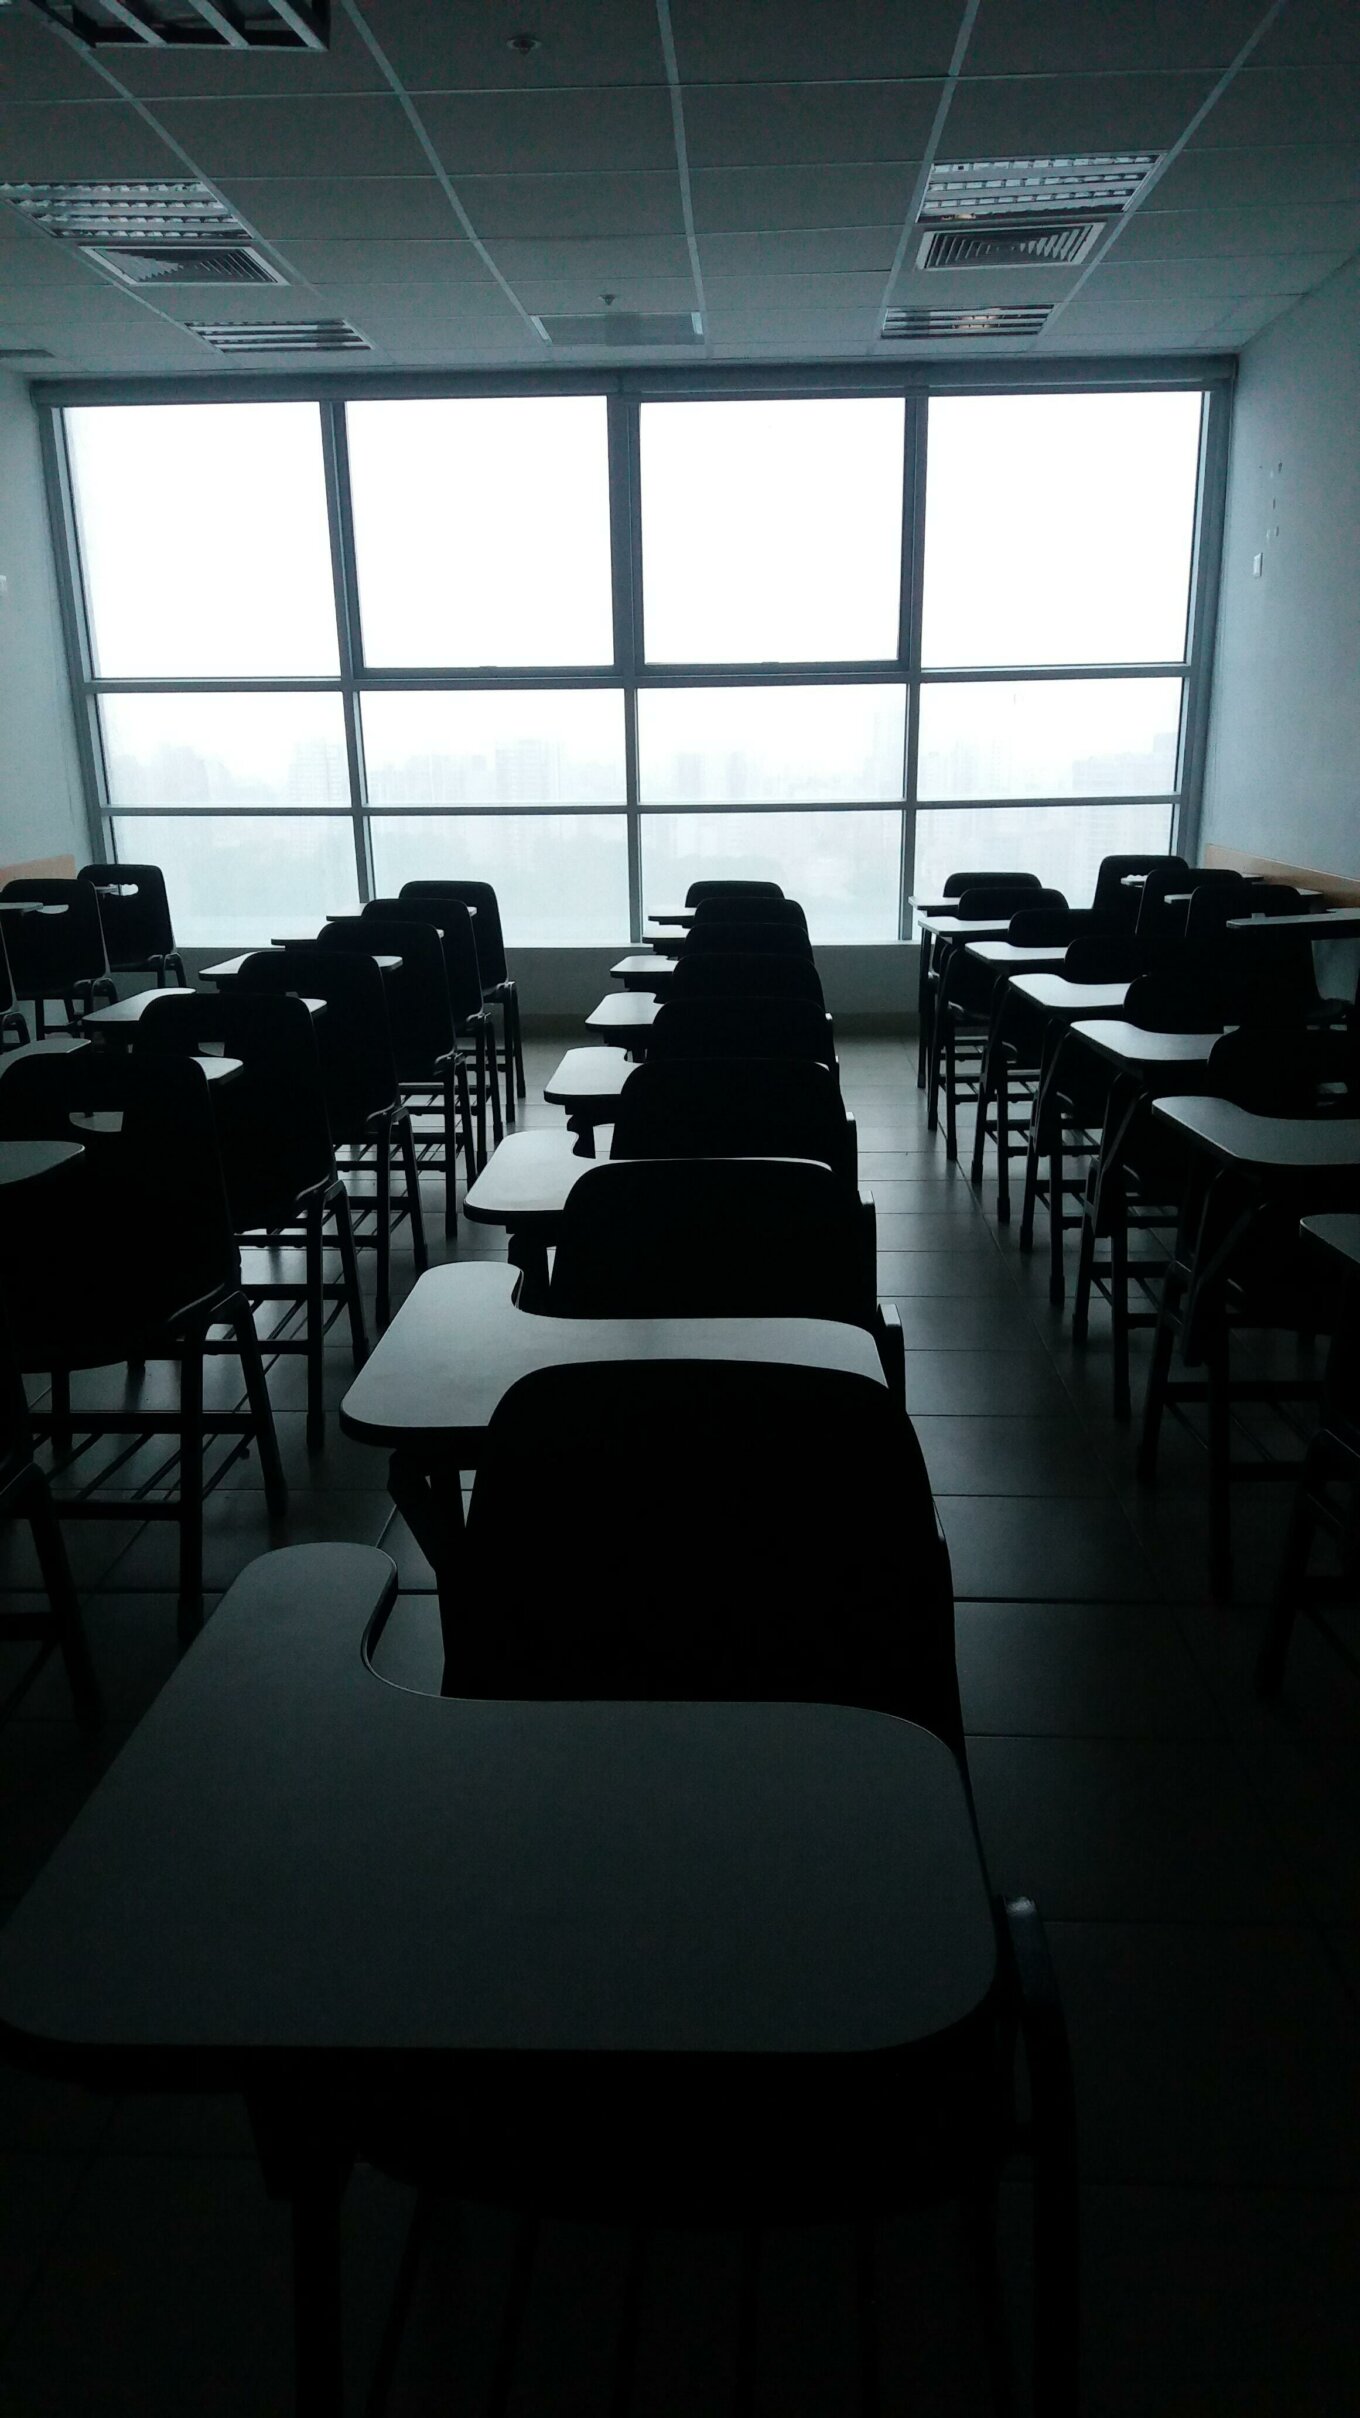 An empty school classroom